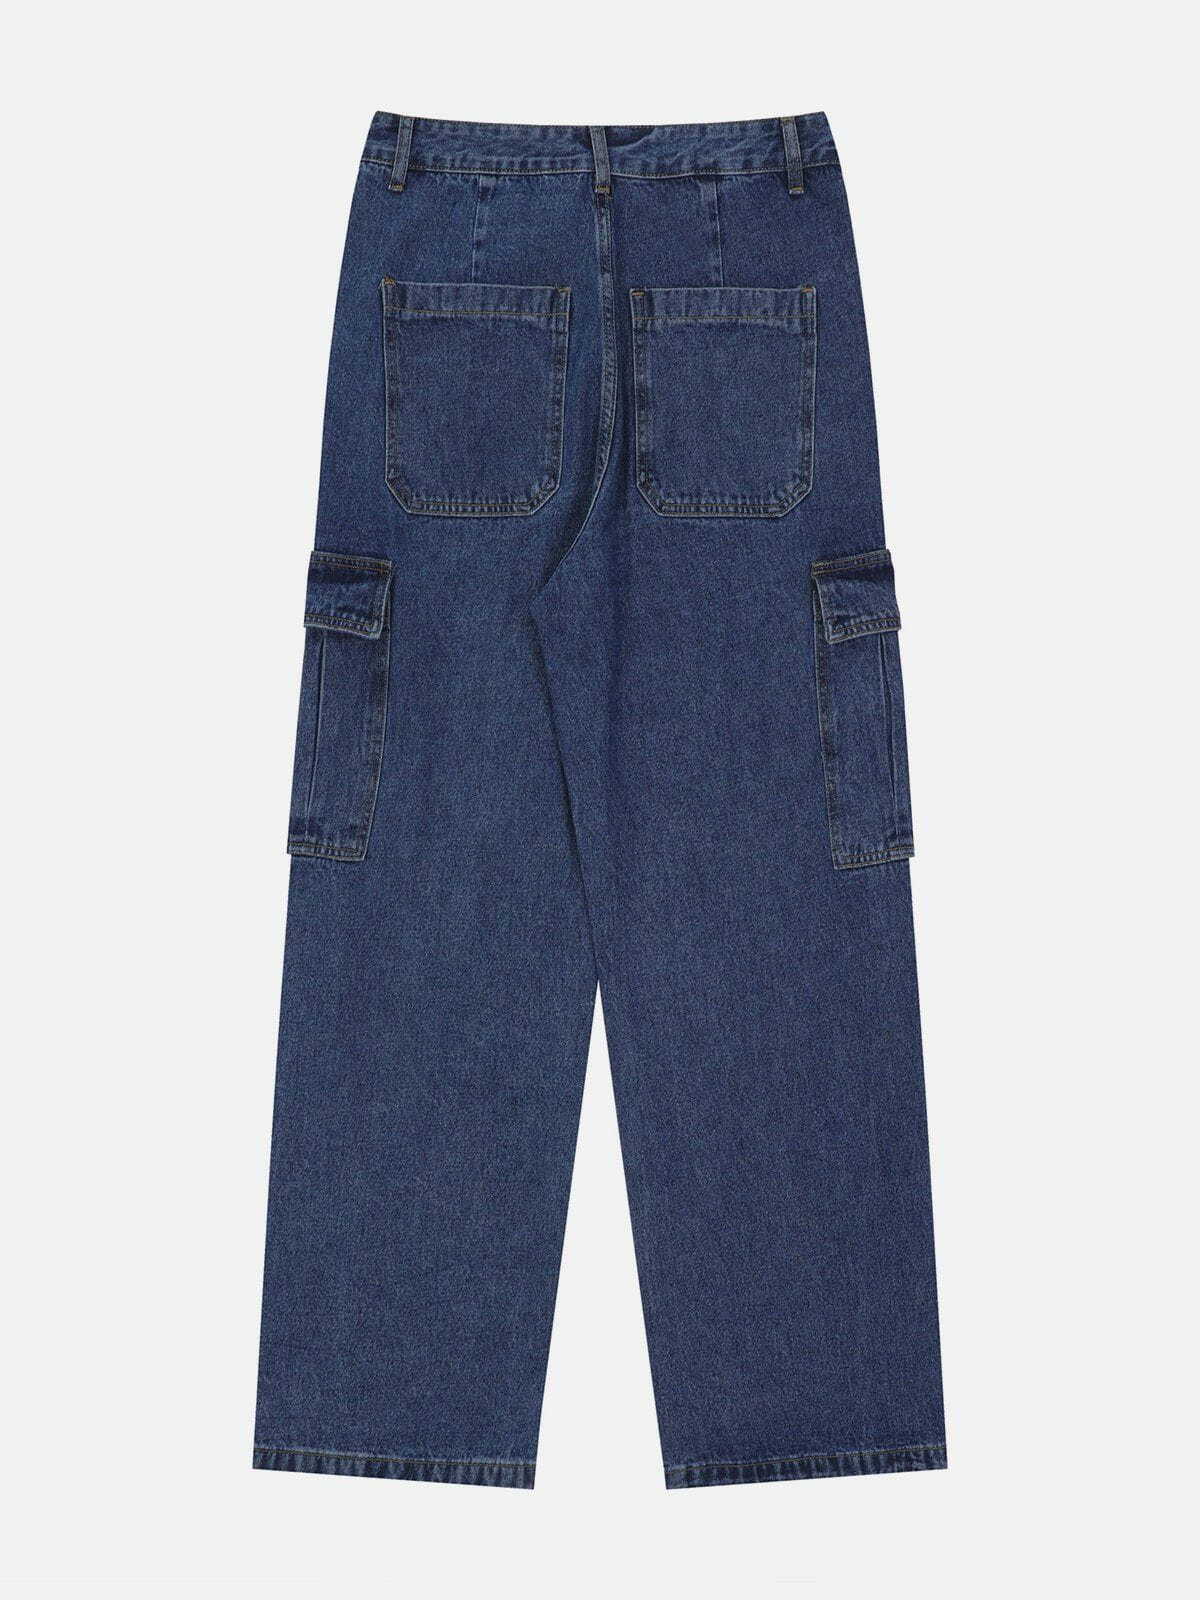 vintage patched pocket jeans edgy y2k streetwear 3271